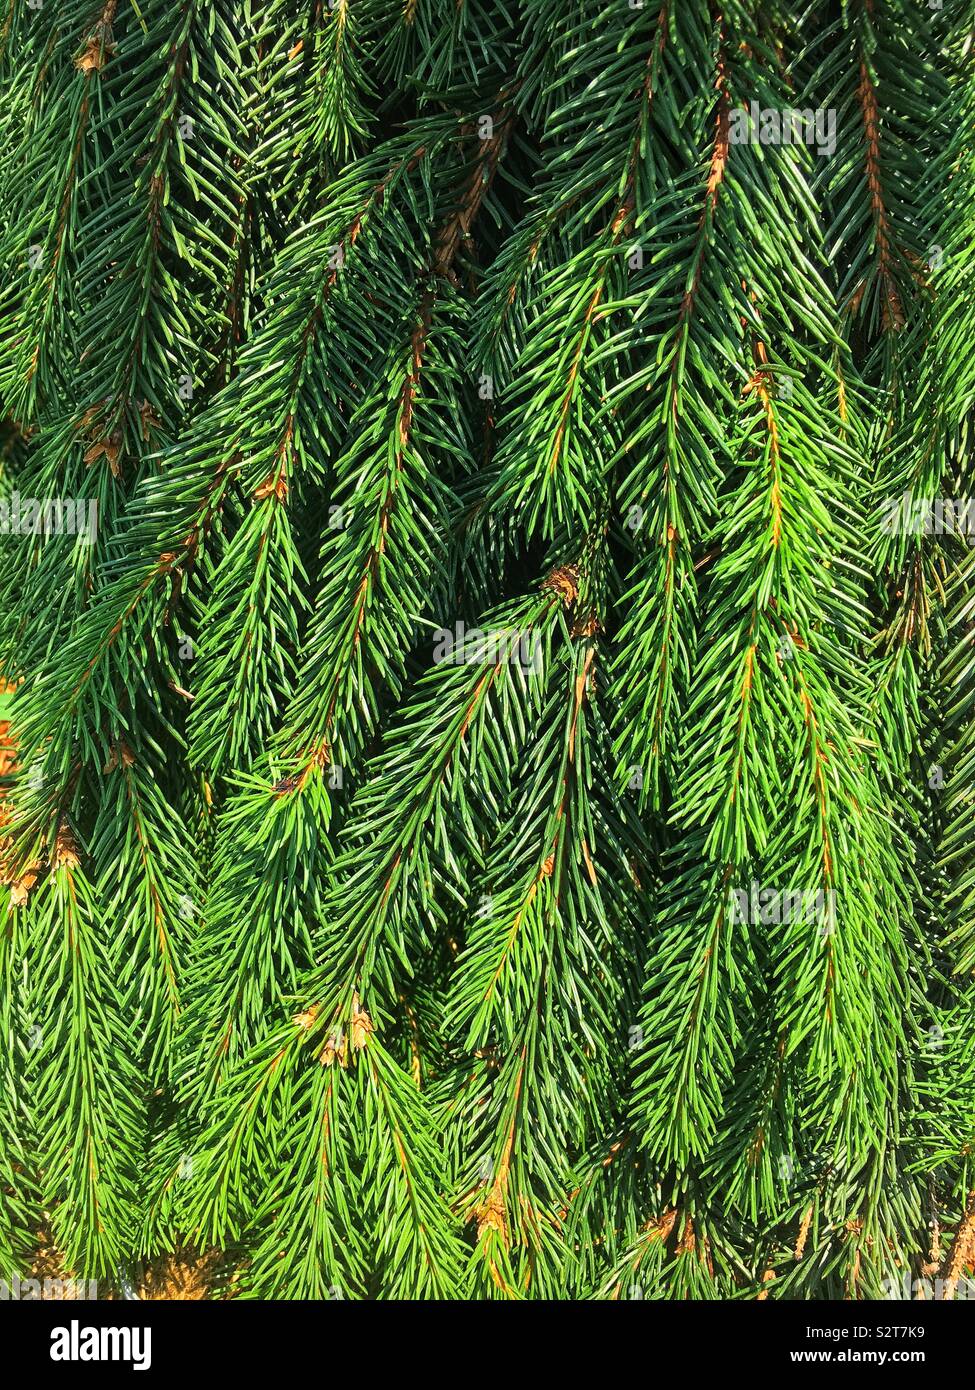 Weeping pine tree, inversa norway spruce. Stock Photo